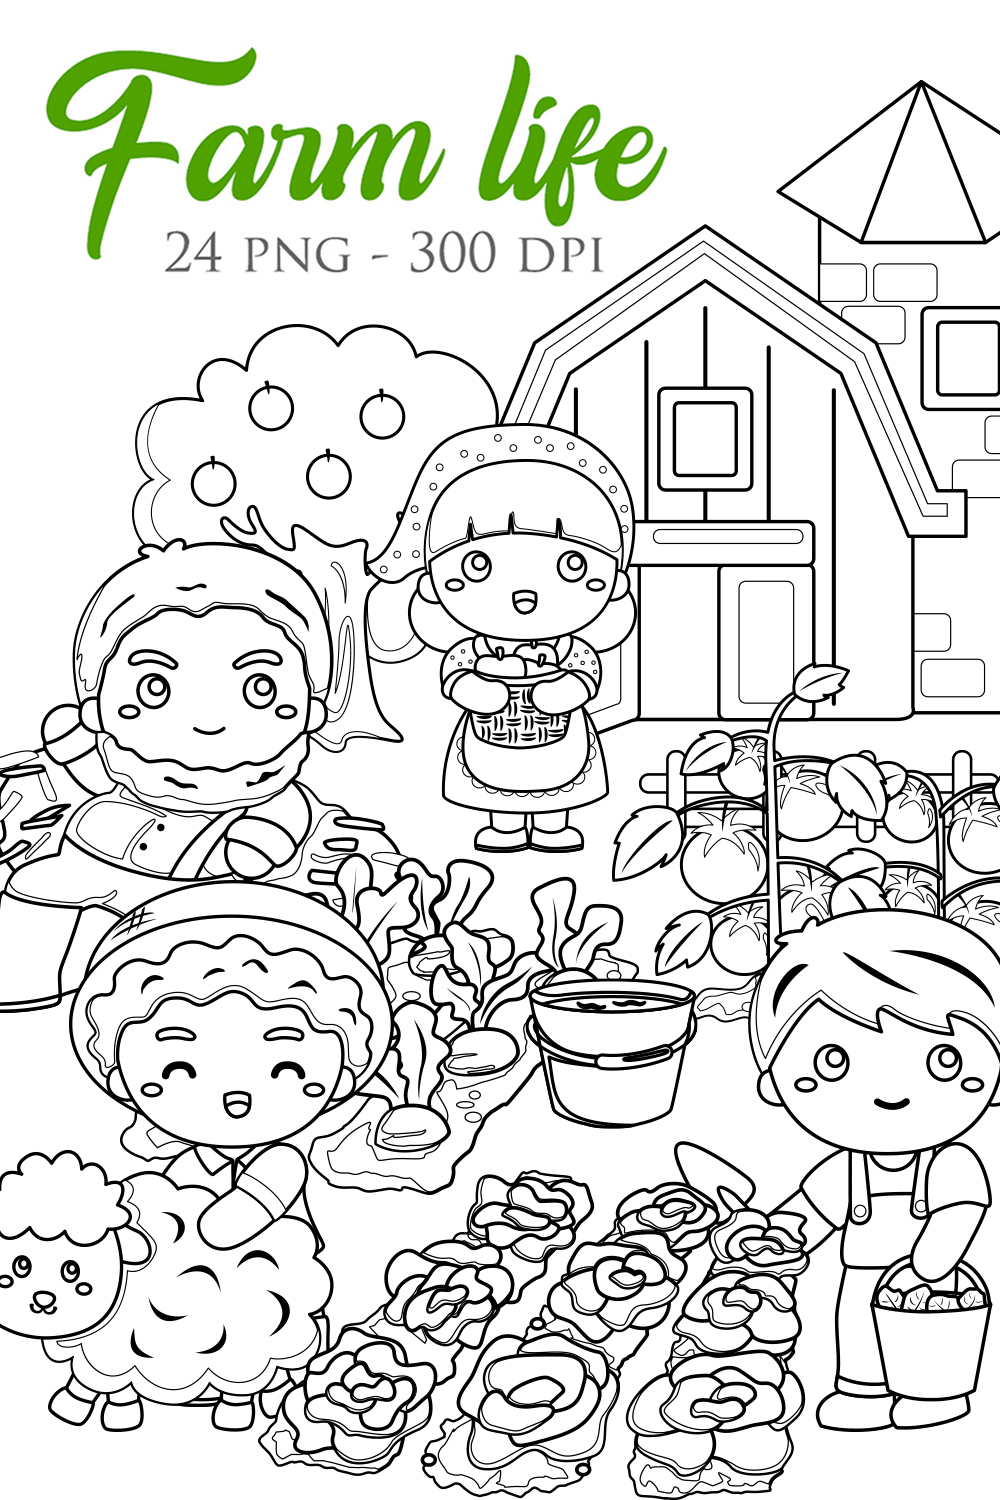 Farmer Family Farm Life Harvest Vegetables and Animals Digital Stamp Outline pinterest preview image.